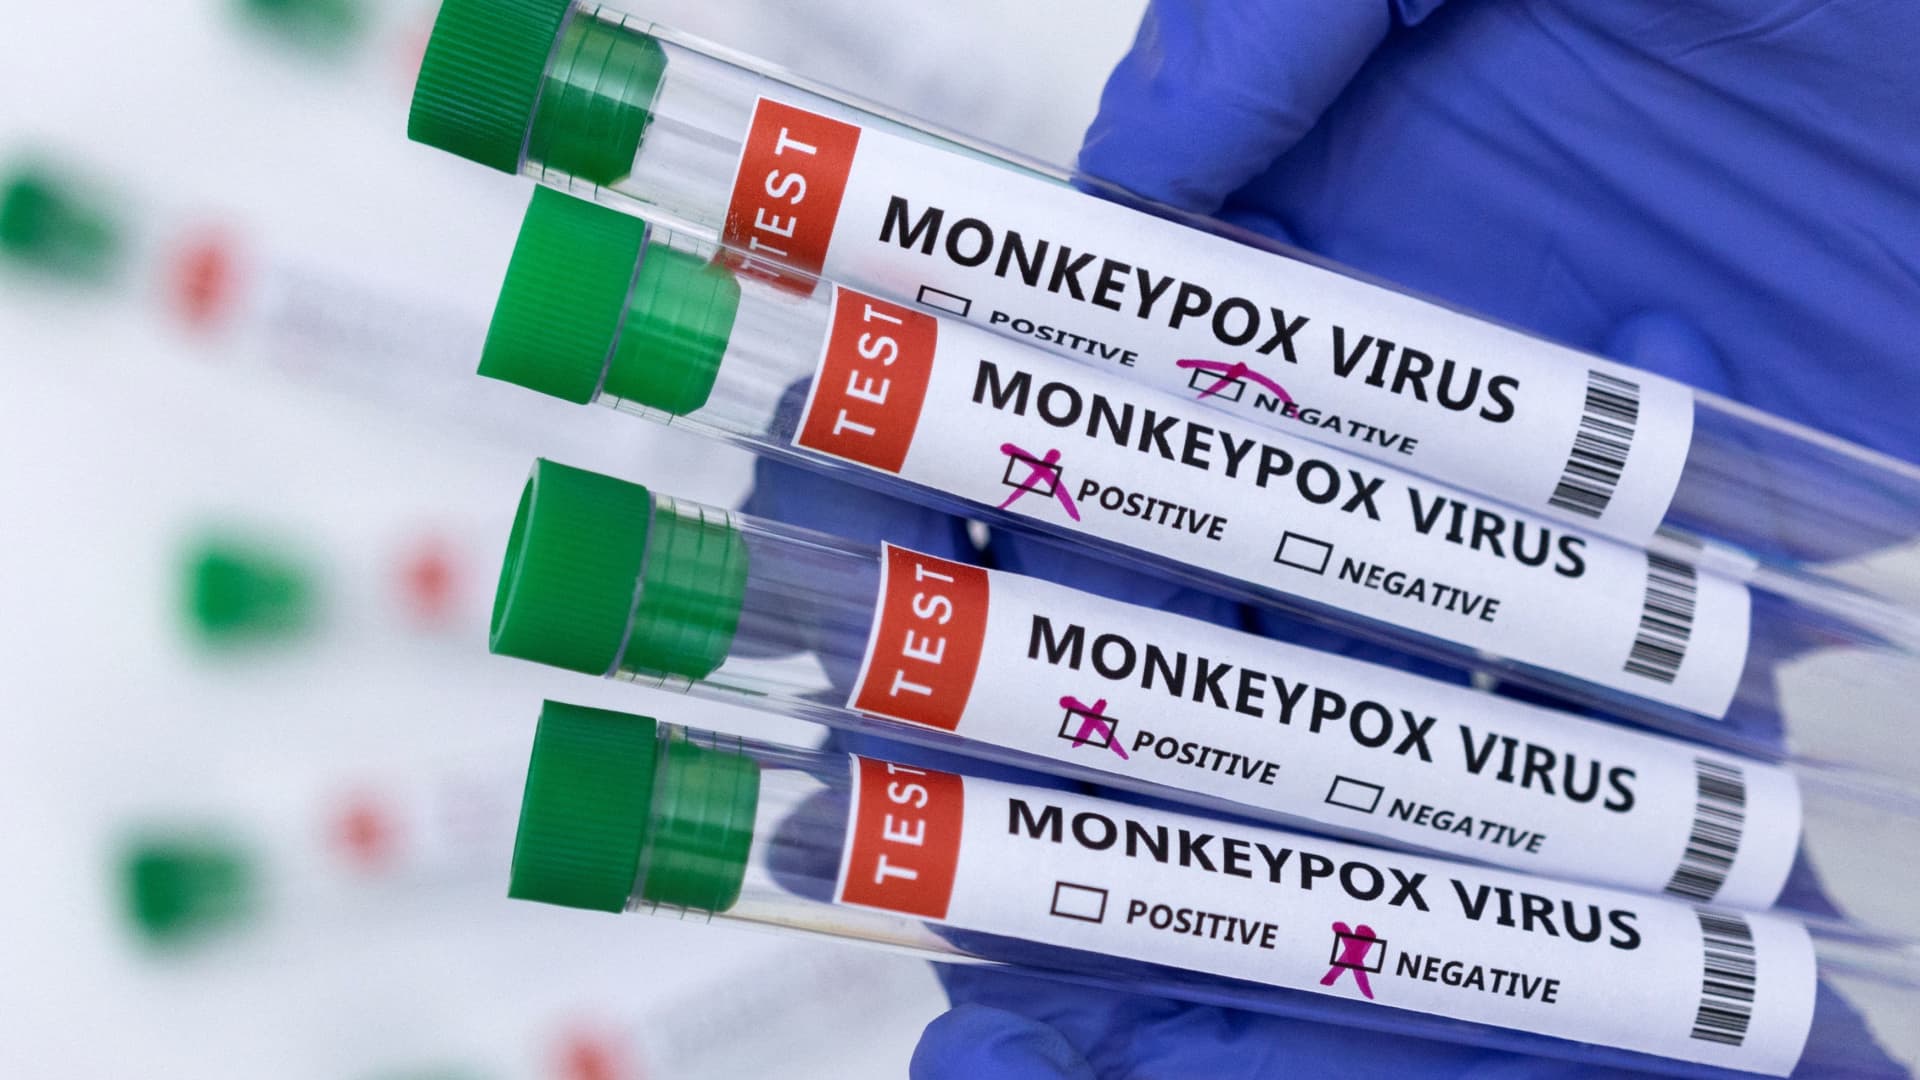 CDC raises monkeypox alert as global cases surpass 1,000